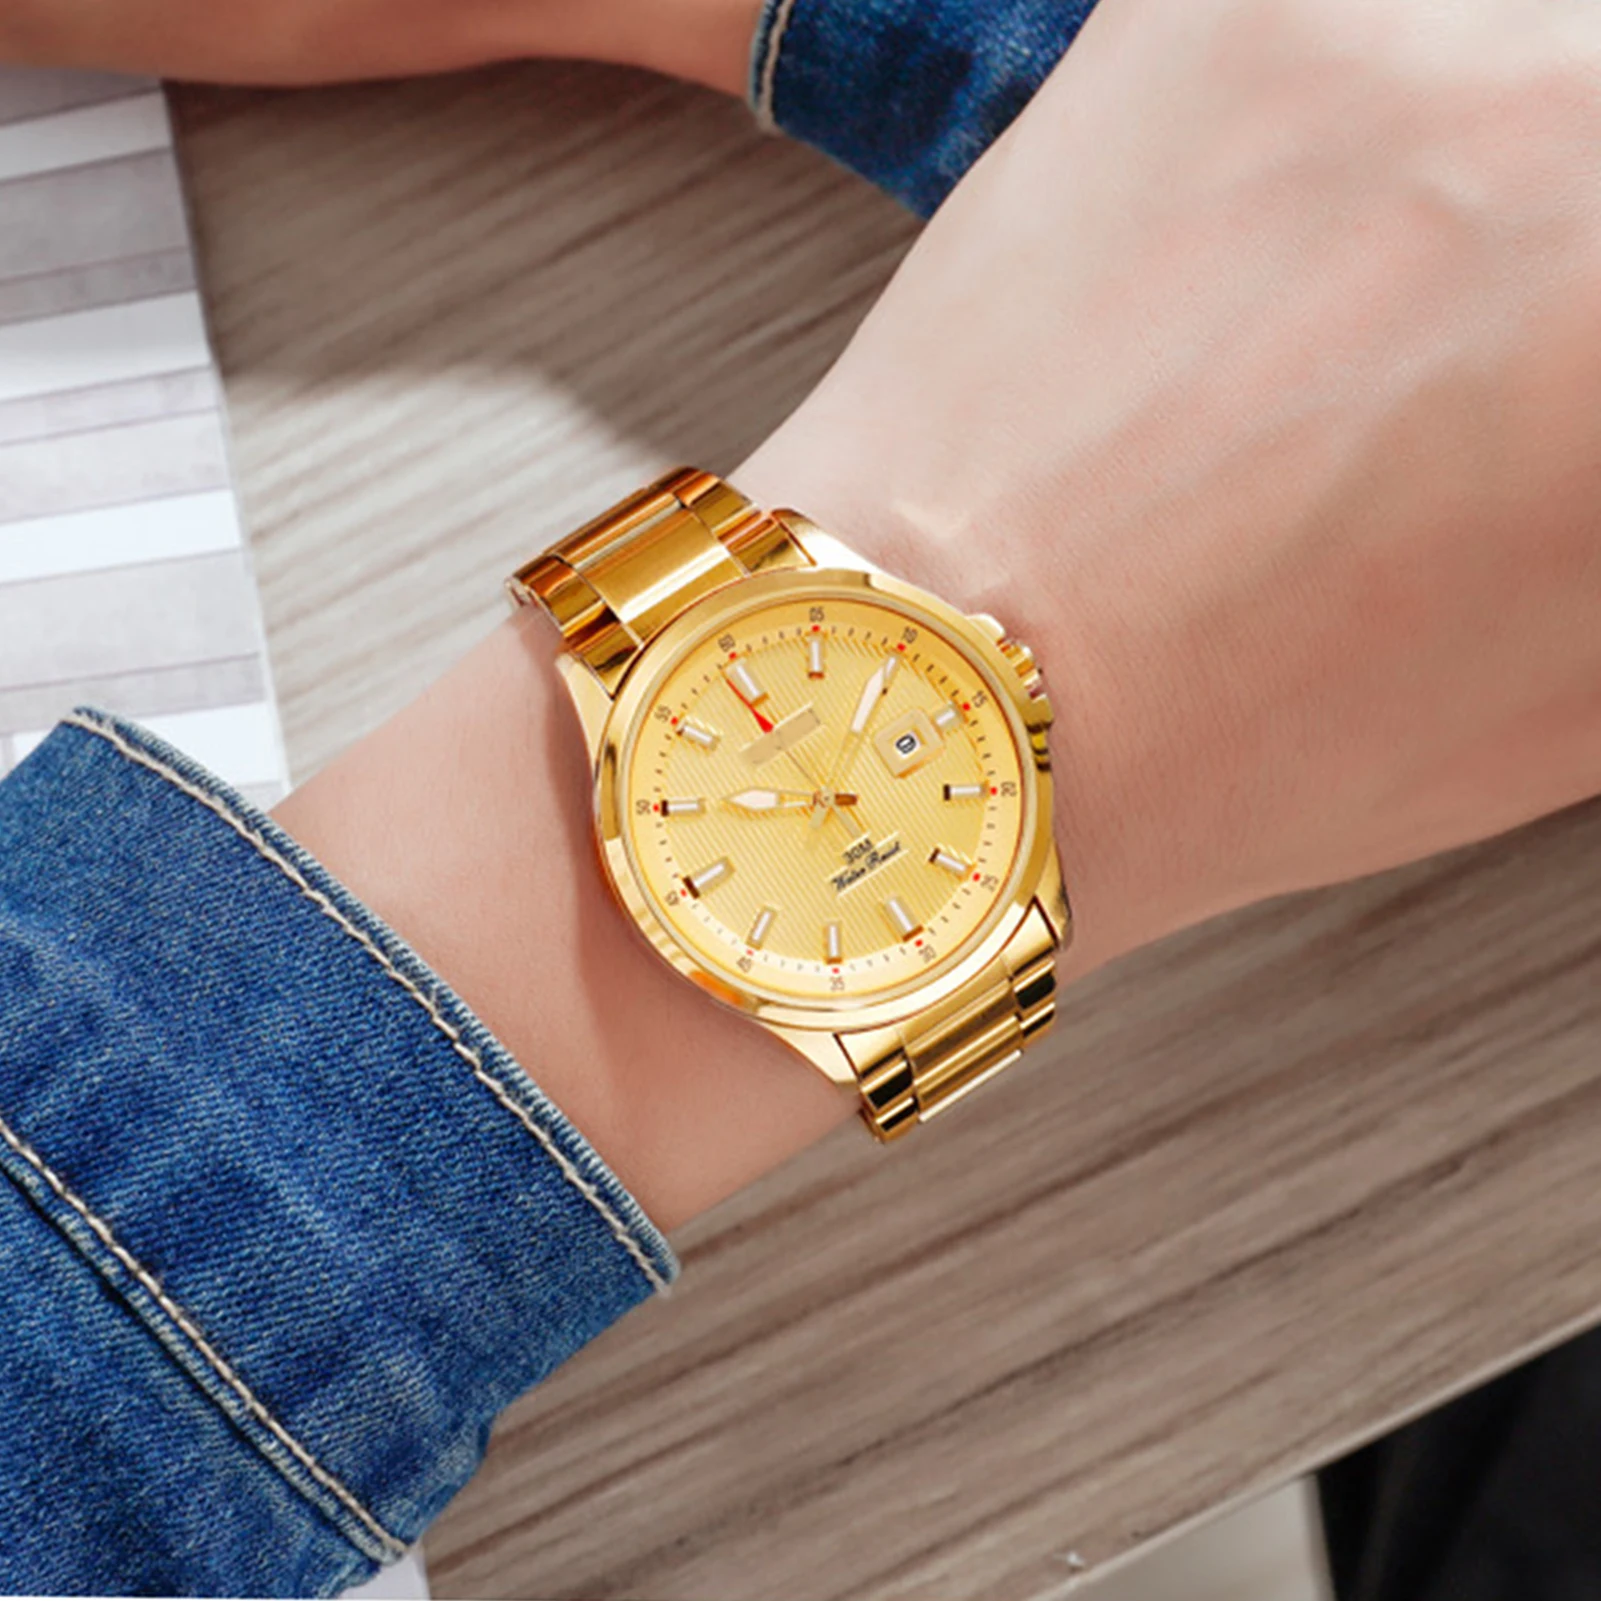 

Analog Quartz Watch for Men with Calendar Display Zinc Alloy Strap Wrist Watch Fashion Auto Date Watch Best Gifts H9